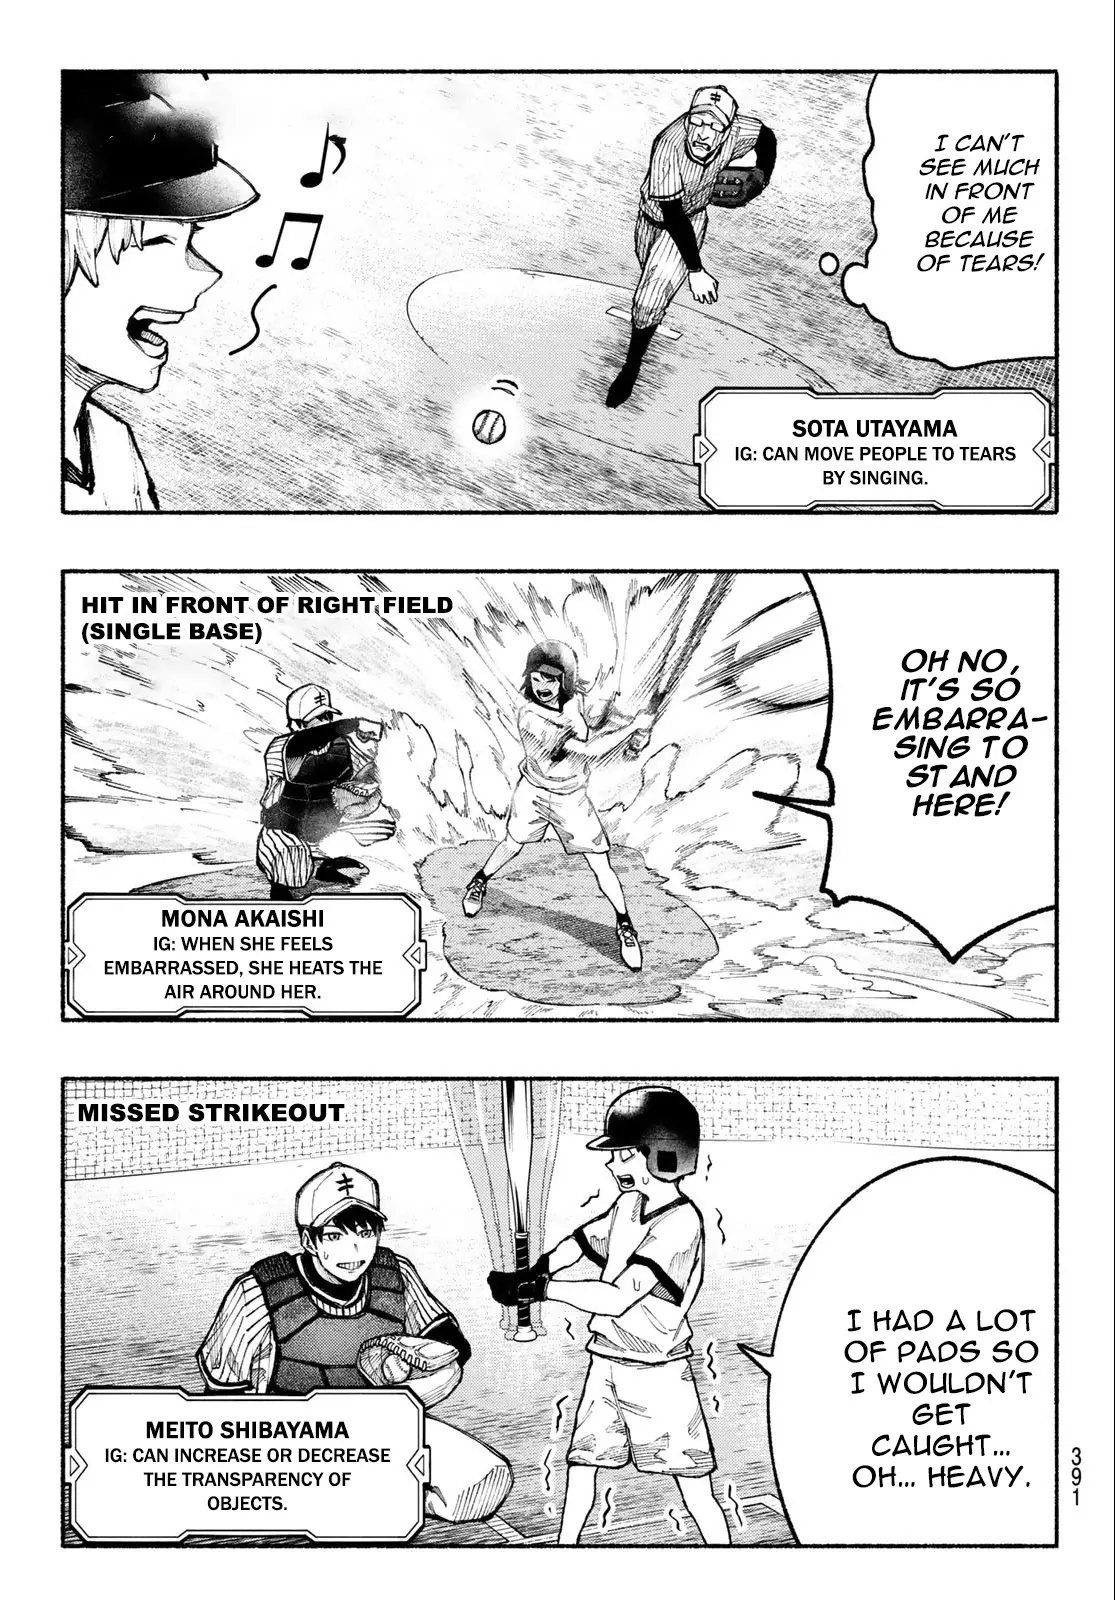 Kimura X Class - 13 page 10-6f6bcf56